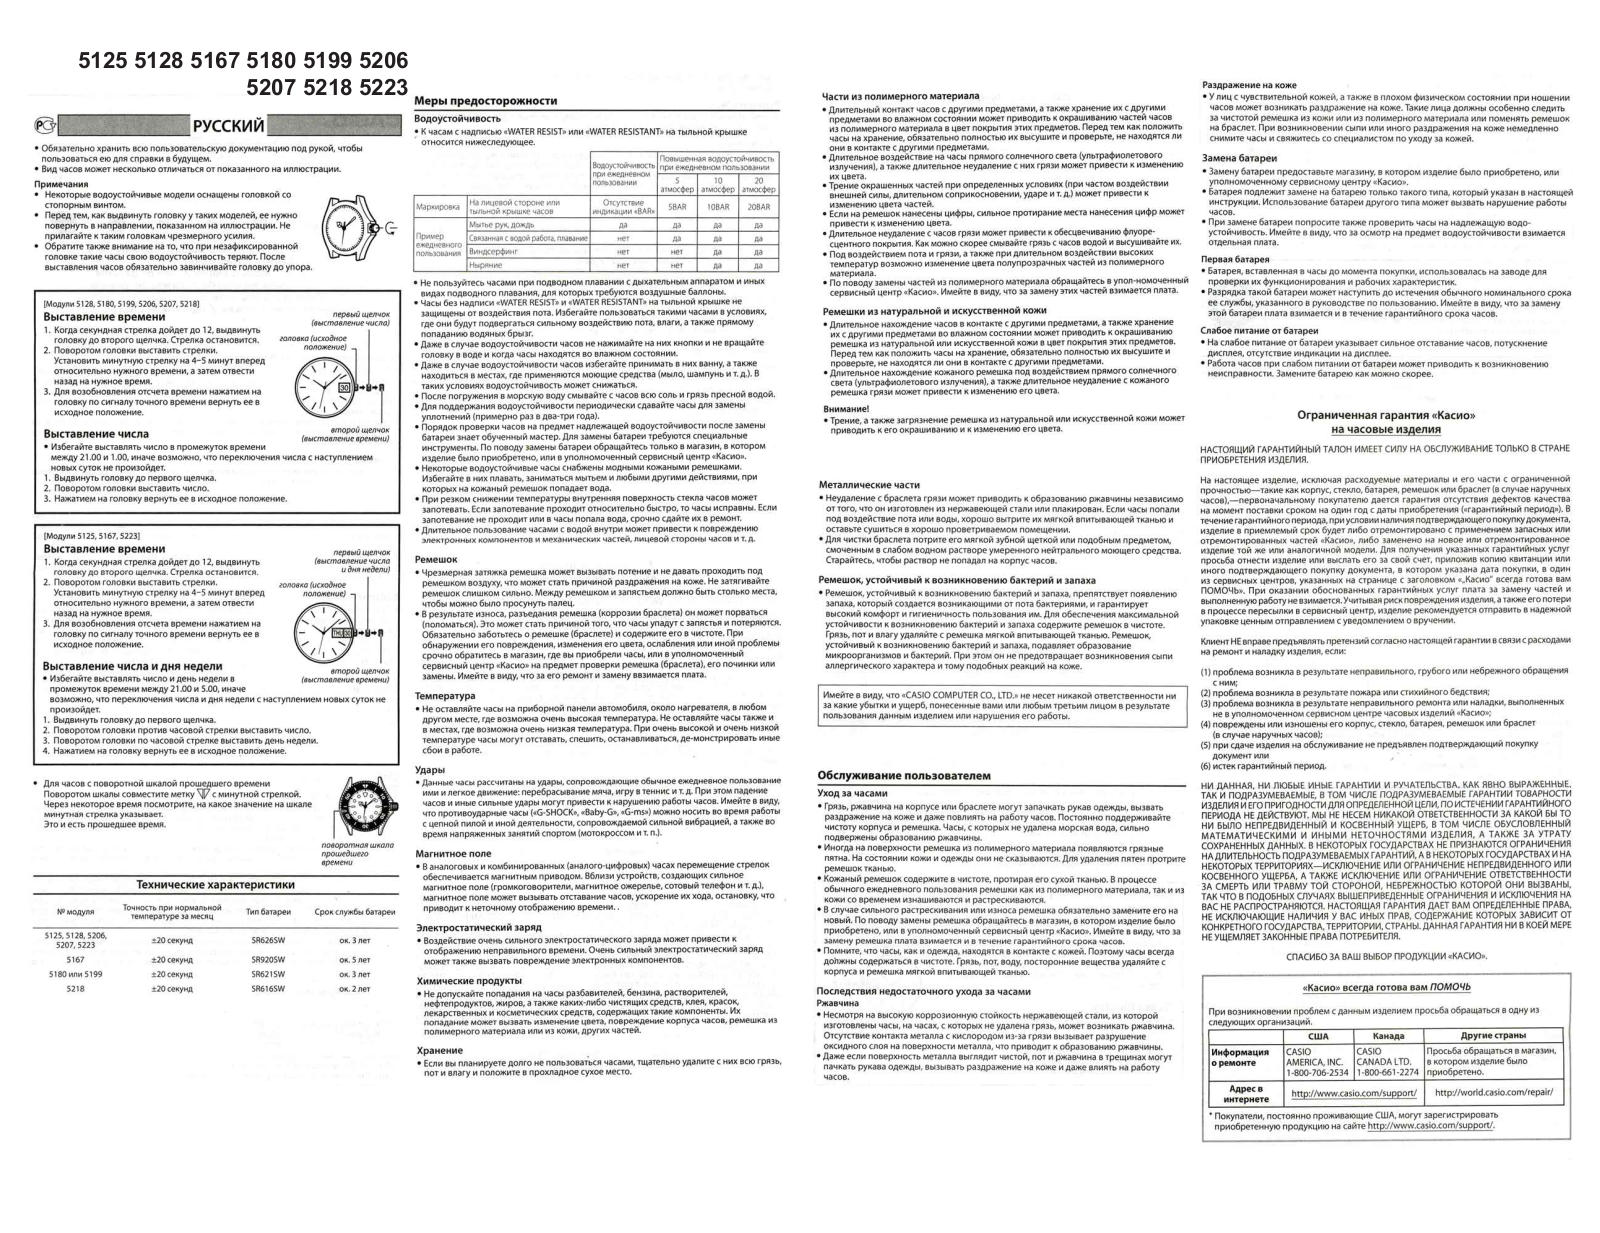 Casio EFR-100D-2A User Manual